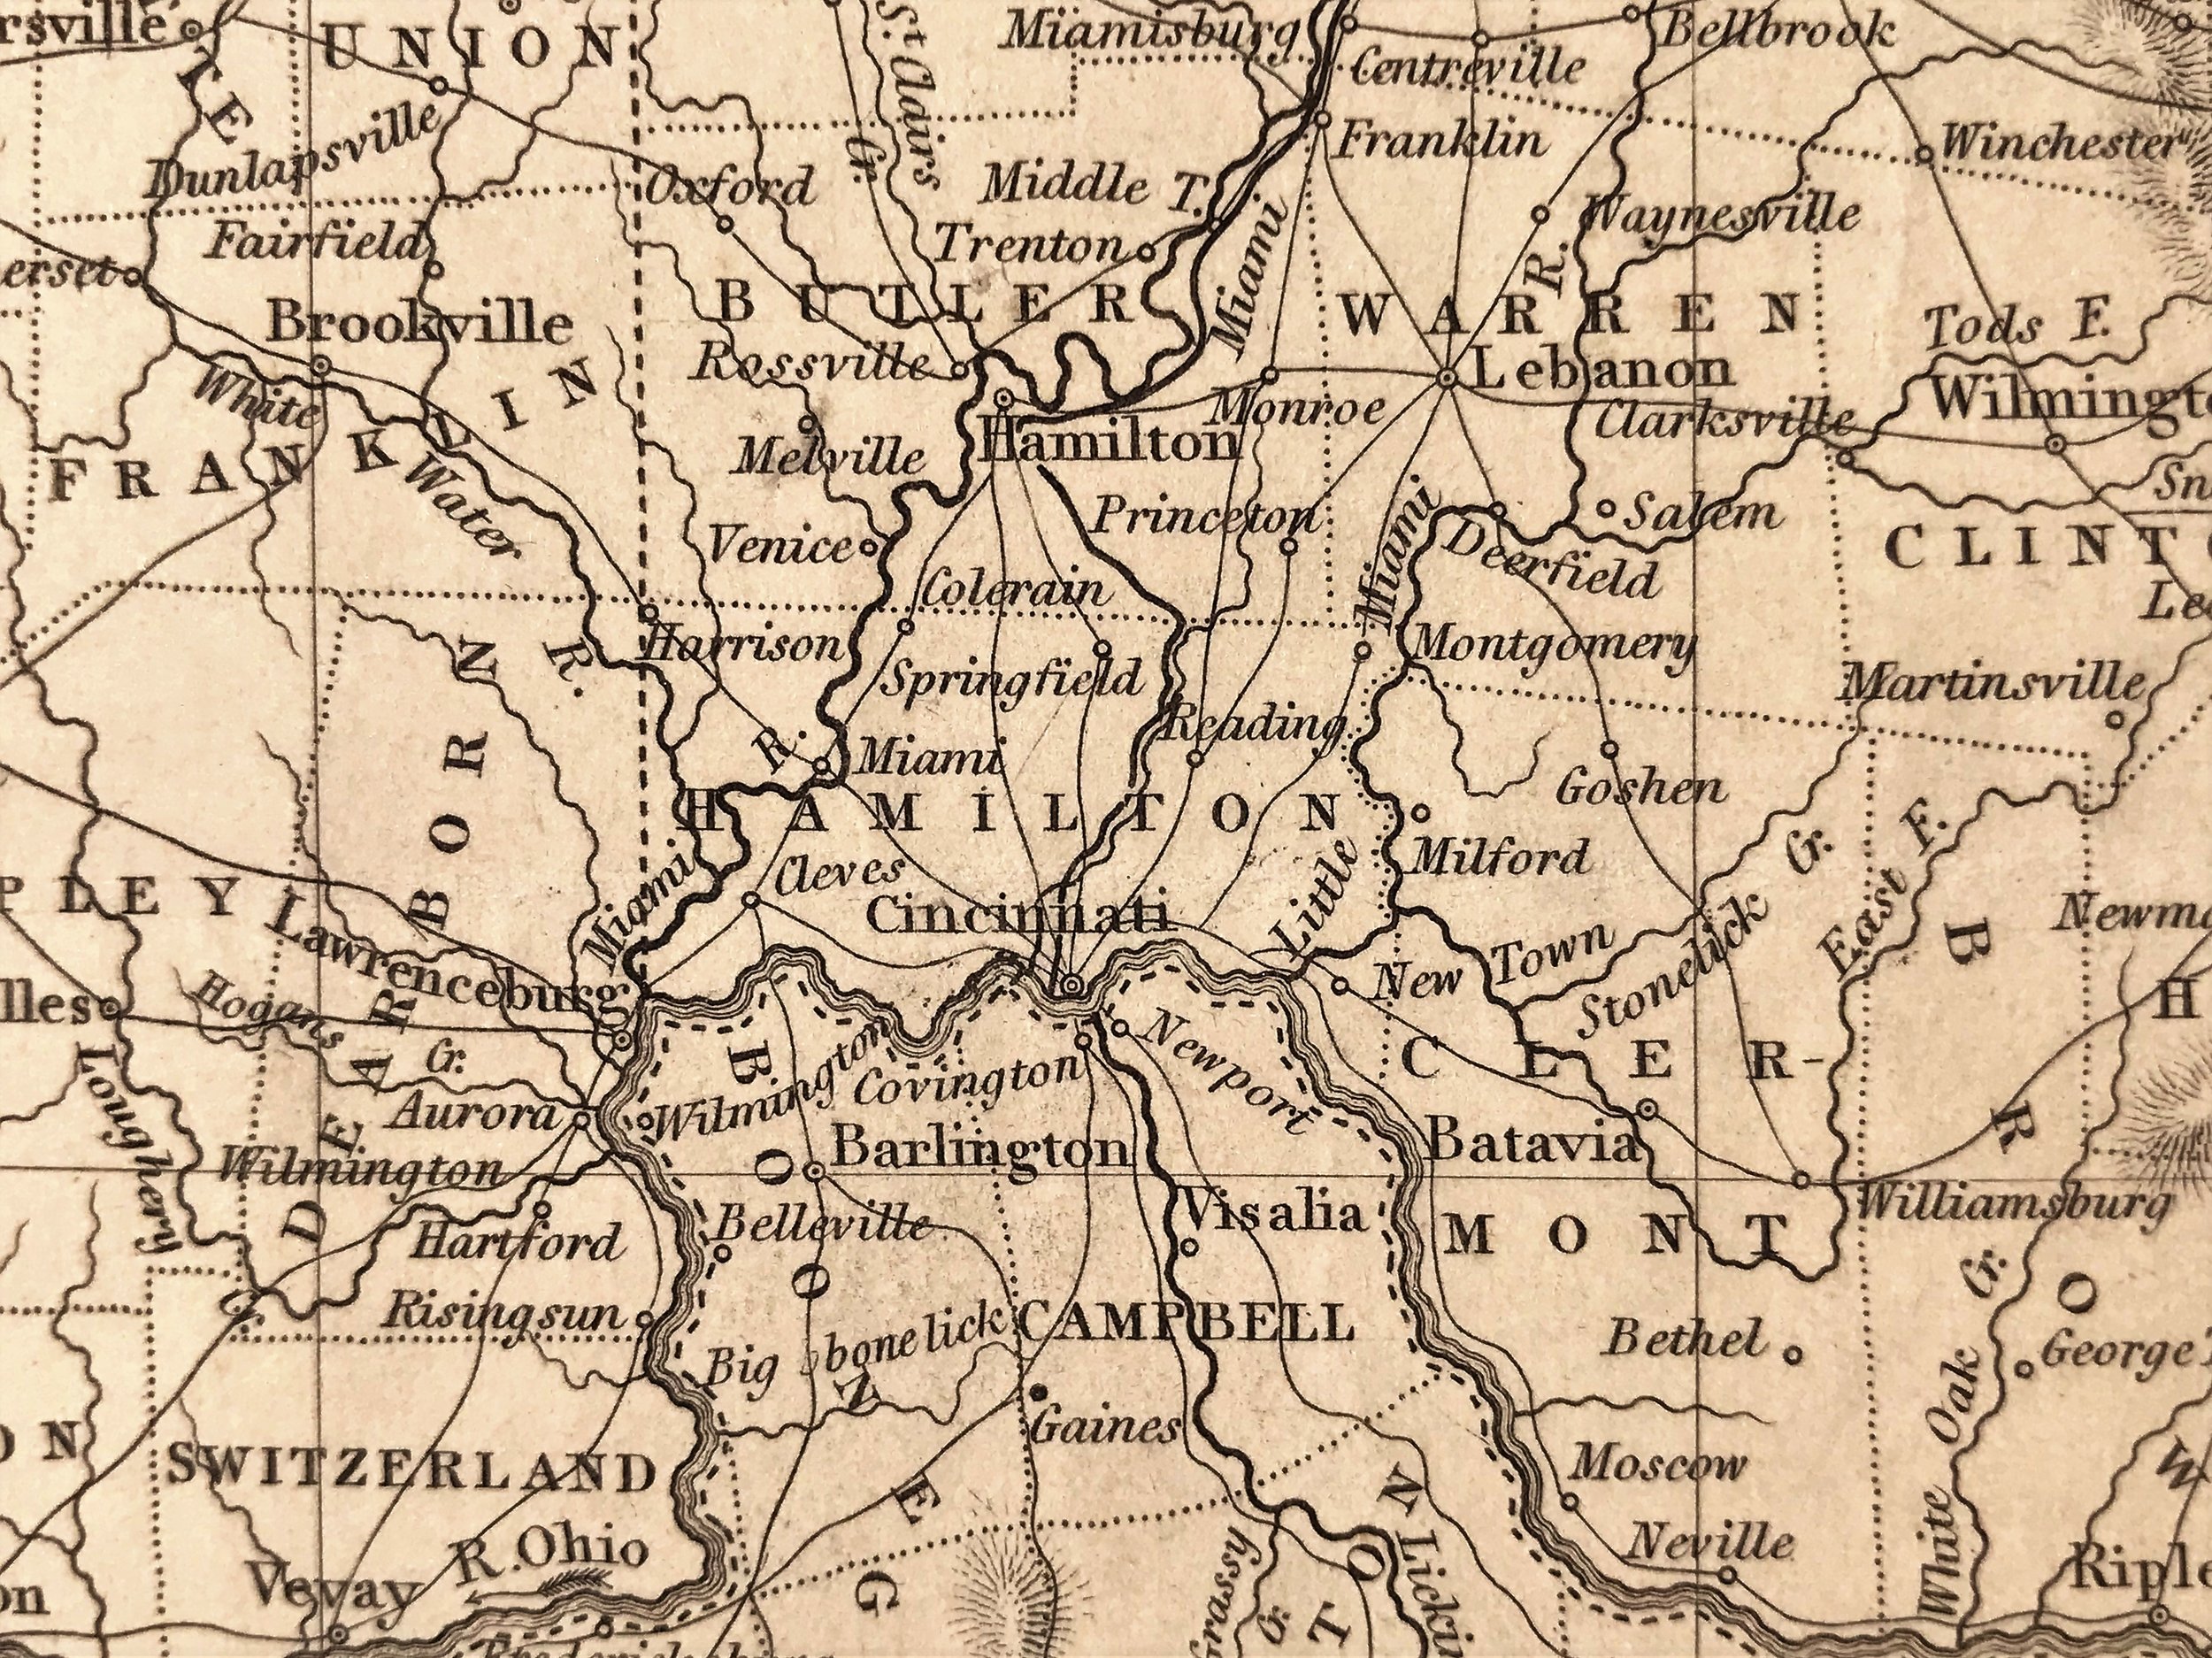 OHIO PIKES OPERA HOUSE ATLAS MAP 1884 CINCINNATI HAMILTON COUNTY FOUNTAIN SQ 